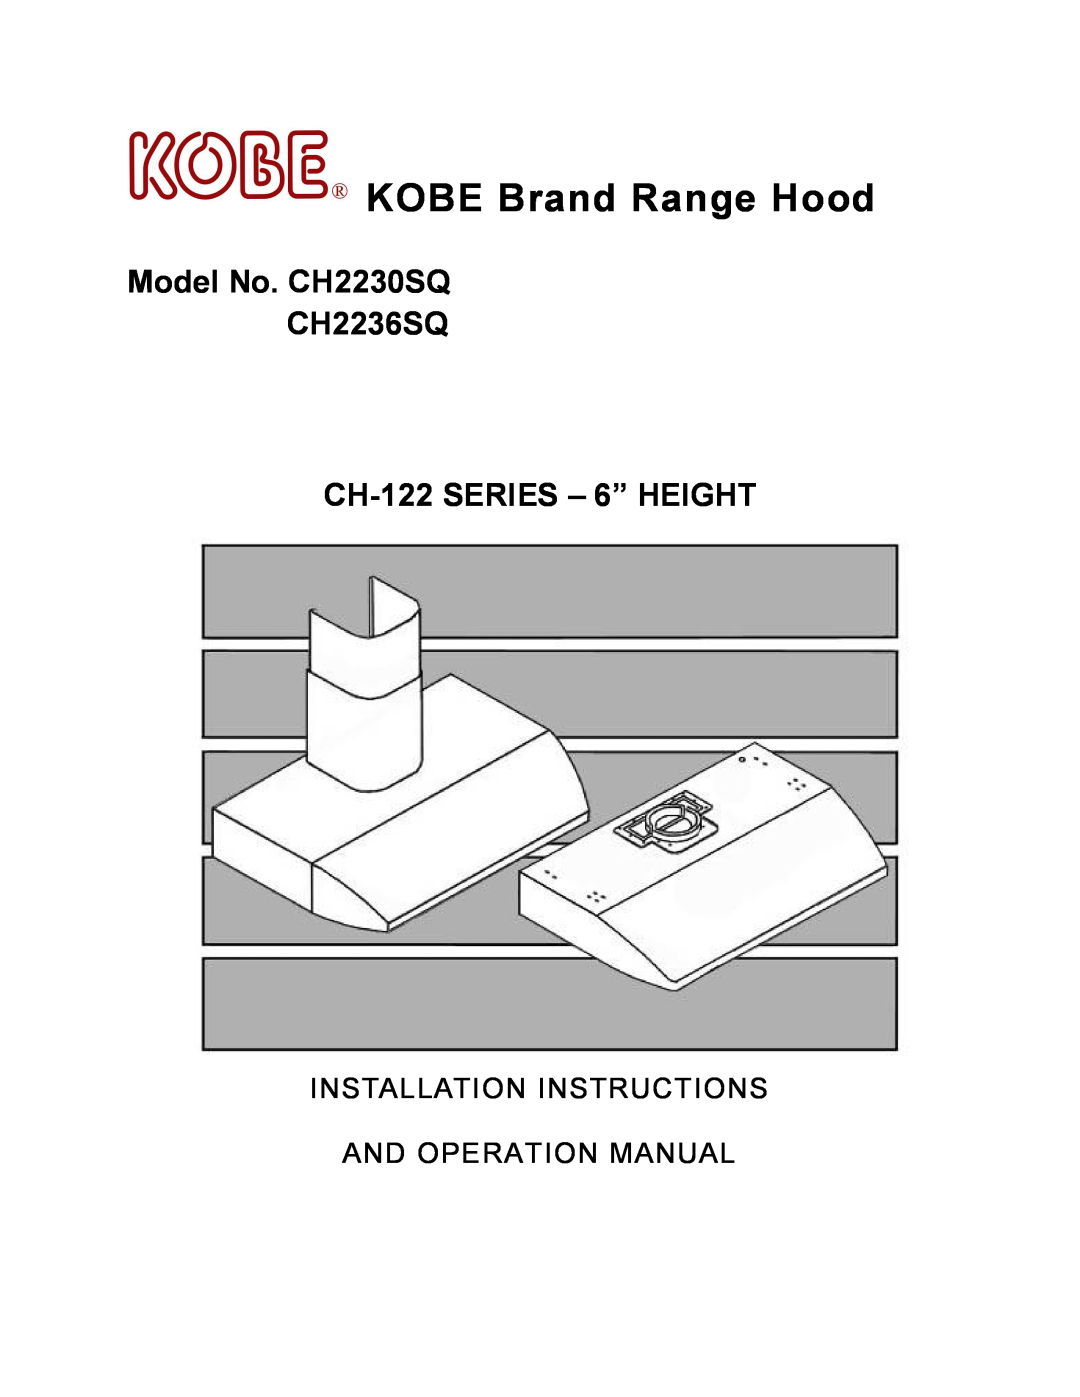 Kobe Range Hoods CH2230SQ, CH2236SQ installation instructions KOBE Brand Range Hood 